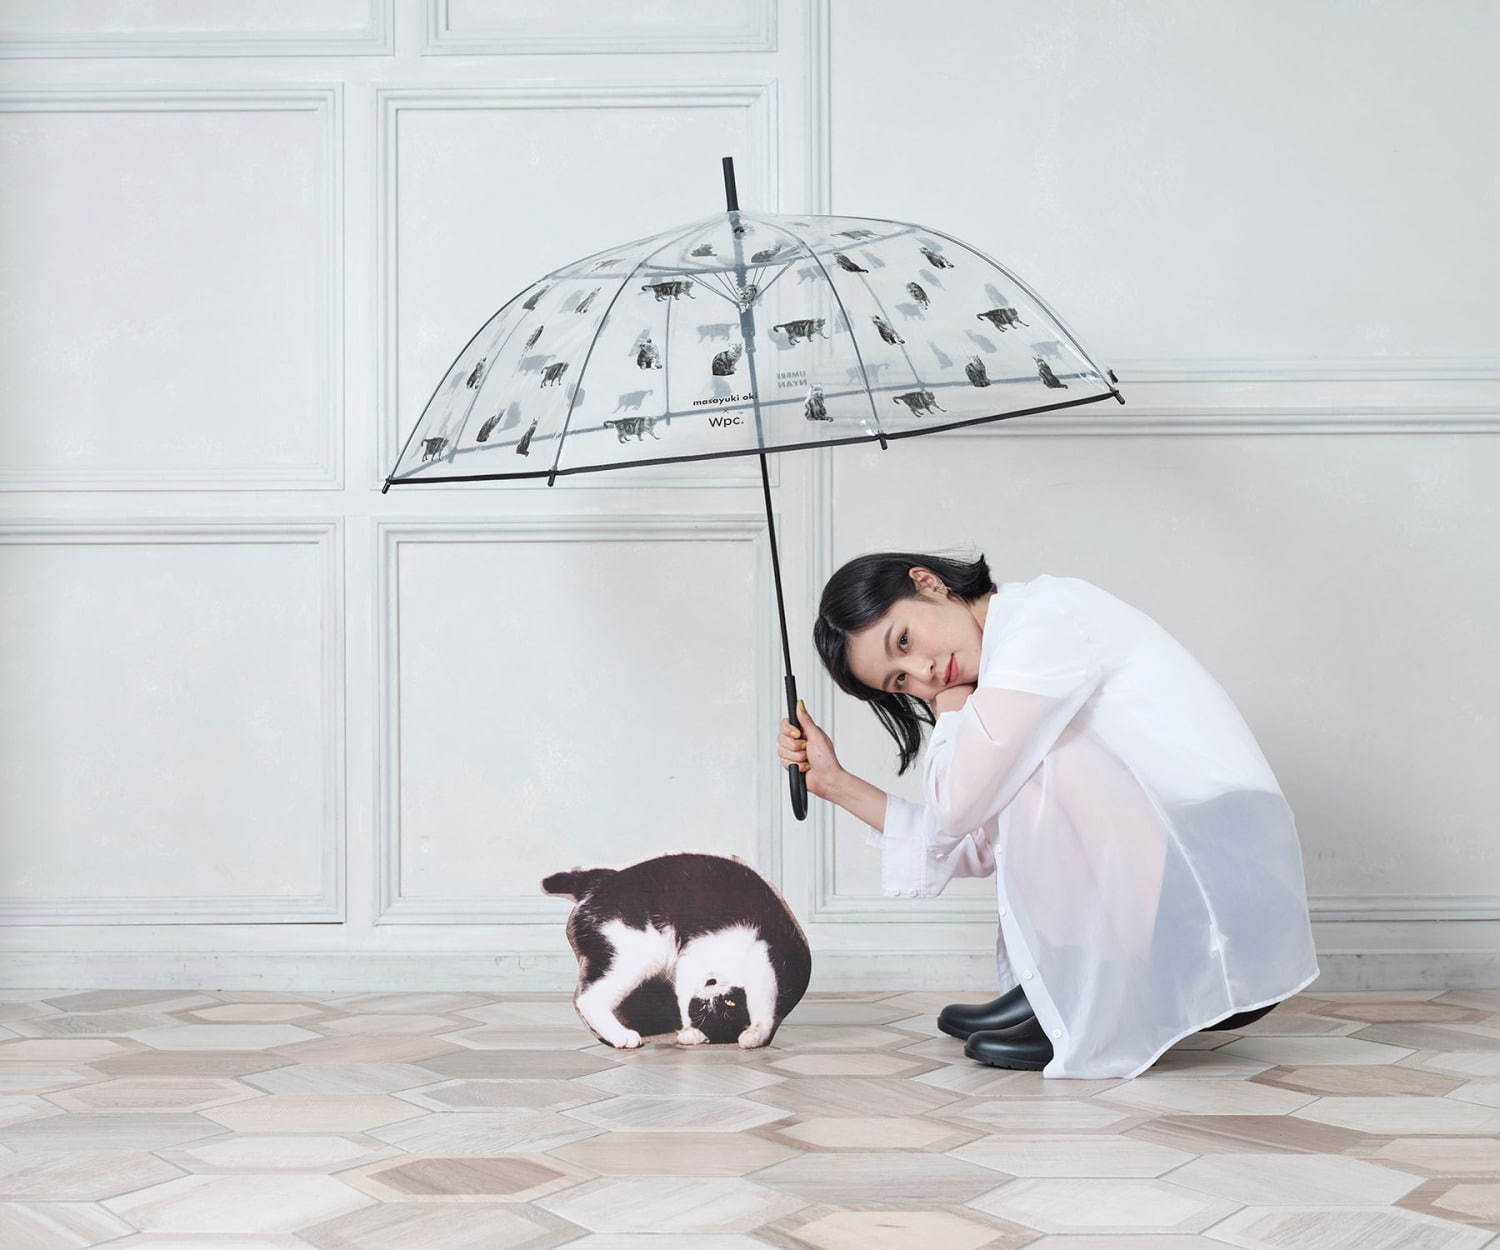 Wpc.×猫写真家・沖昌之の“ねこ柄”ビニール傘、茶トラ猫や“ぶさかわ”猫が一面に｜写真8